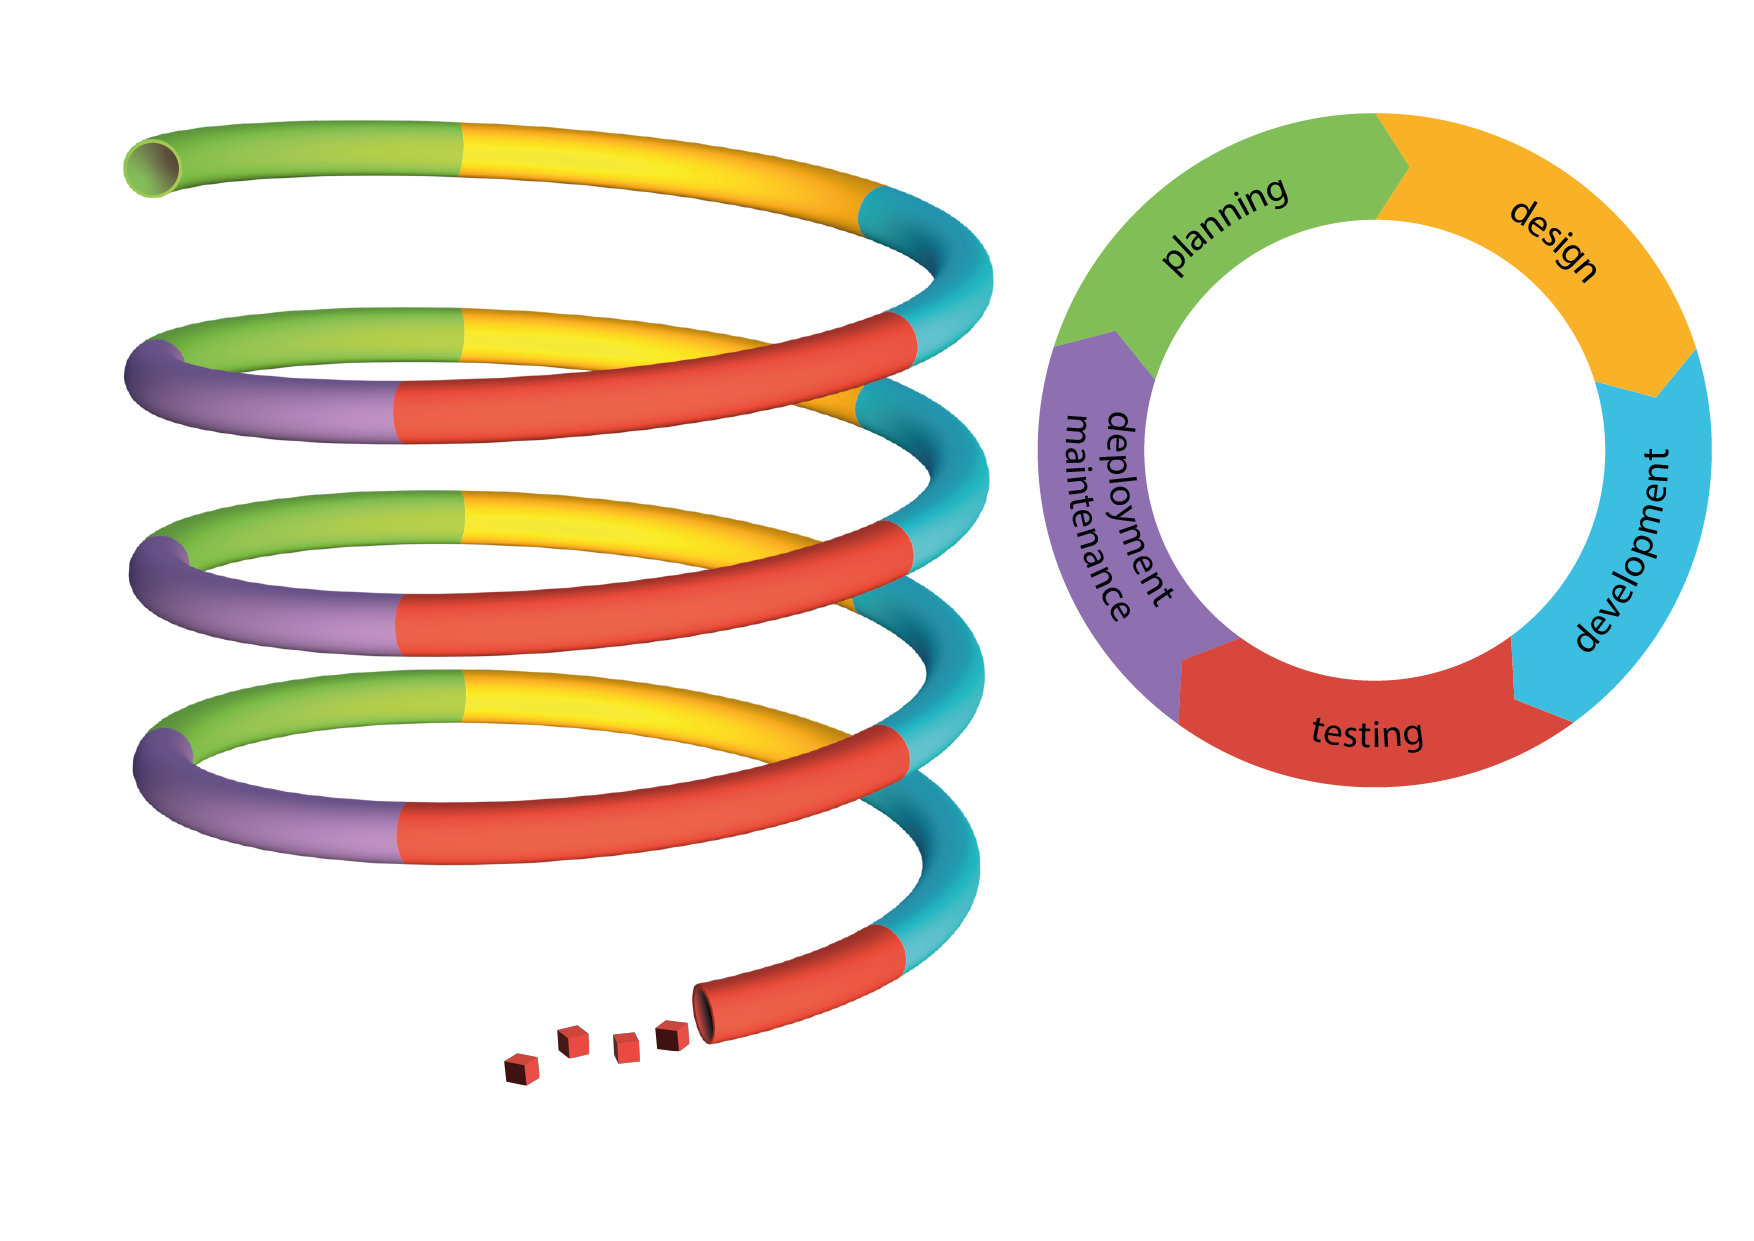 The helix model of SDLC, concept: Lars Eklund, NBIS/UPPMAX, Uppsala University art: Jonas Söderberg, NBIS/UPPMAX, Uppsala University image is released under CC-BY license